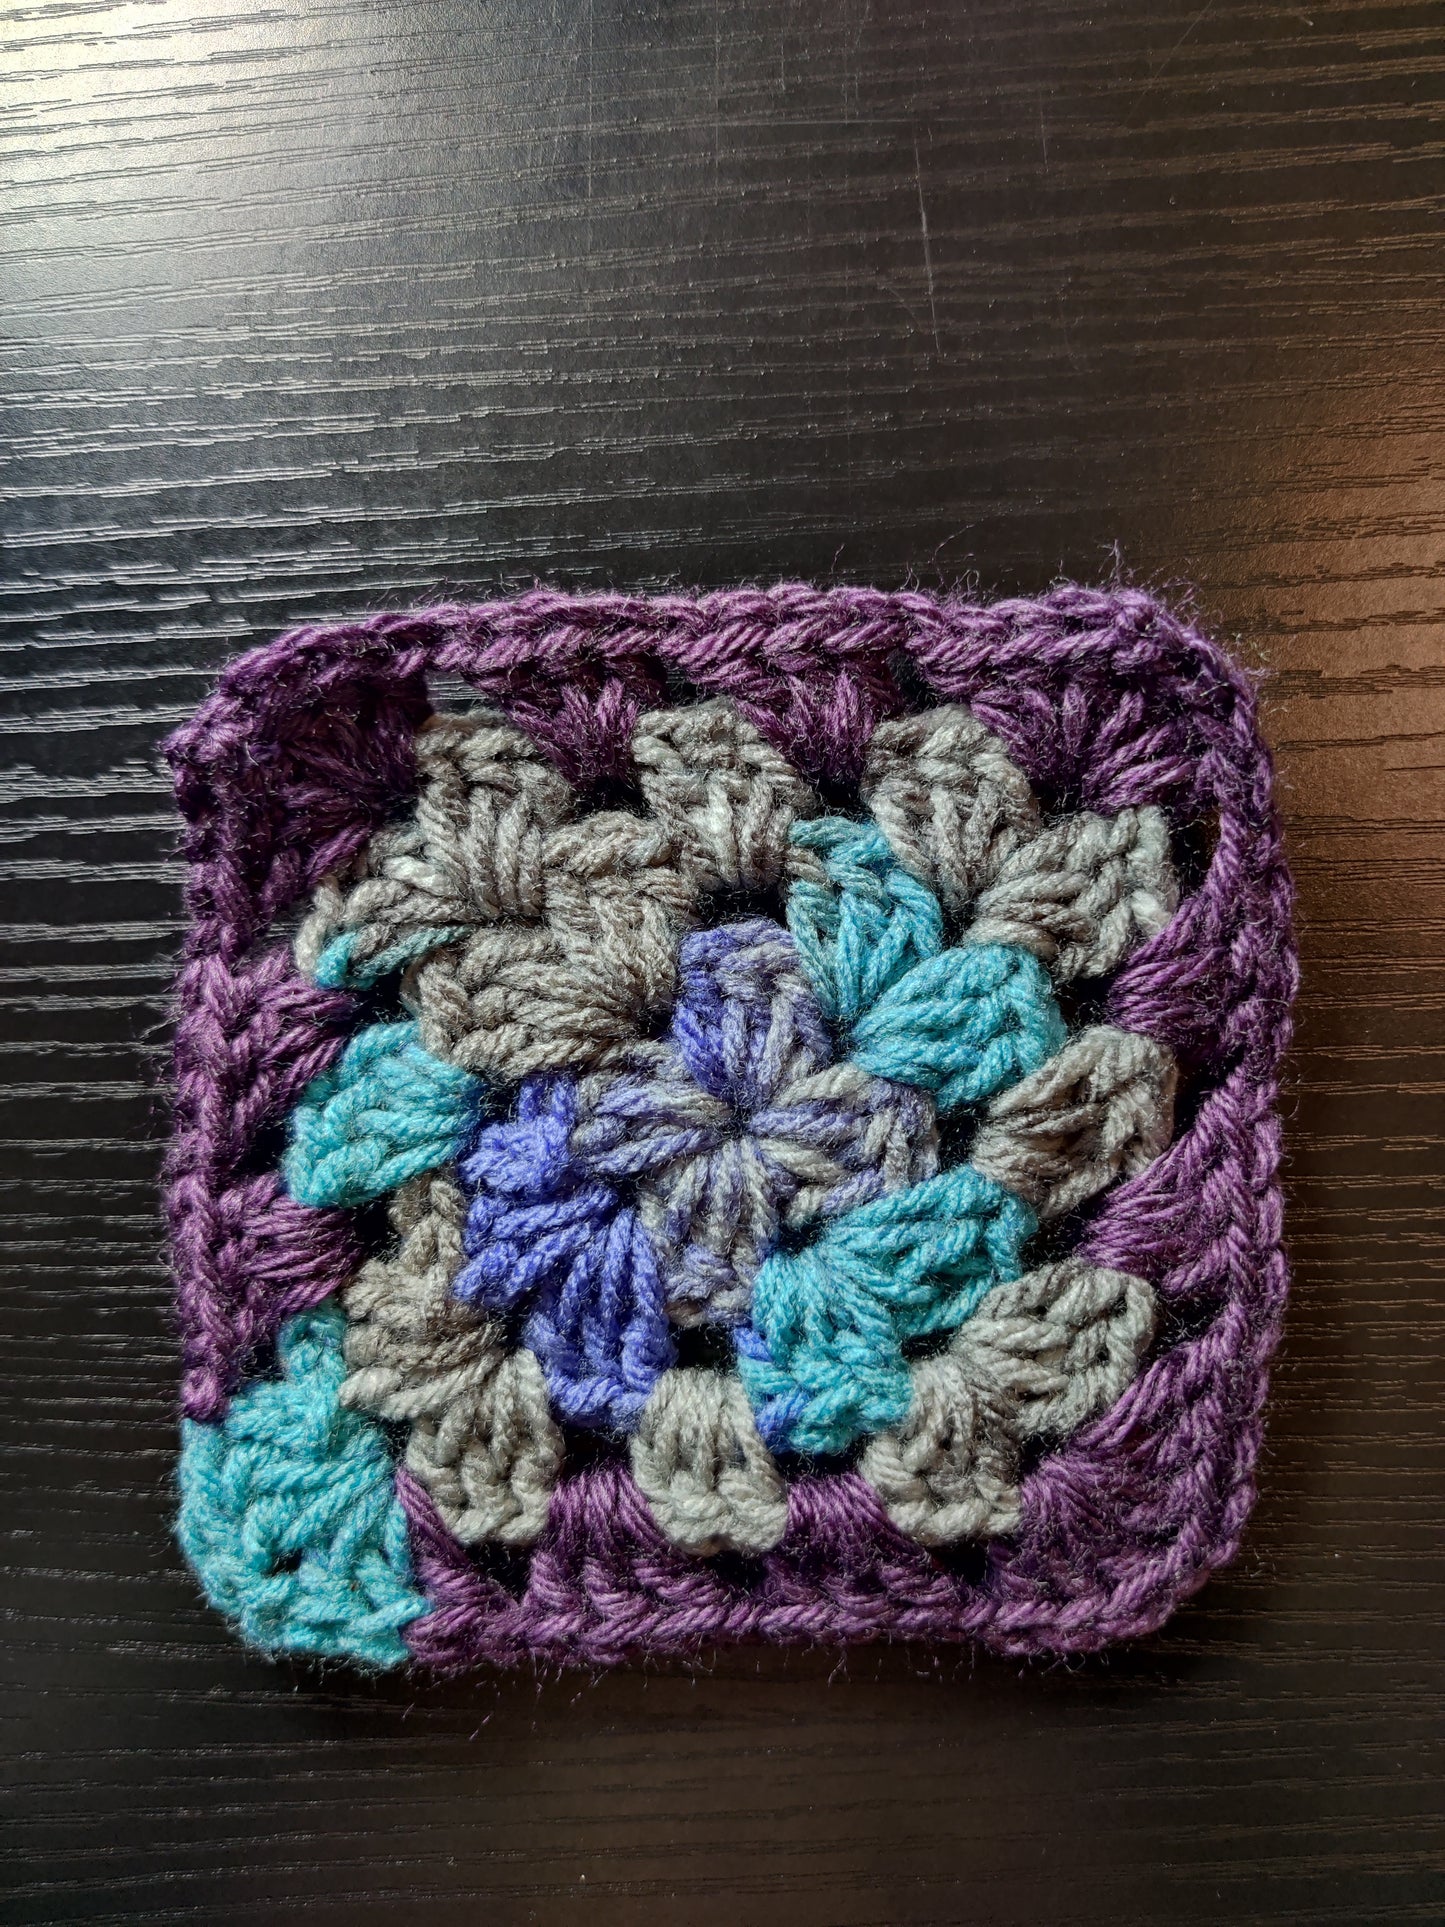 5" x 5" Blue/Grey/Purple Granny Squares